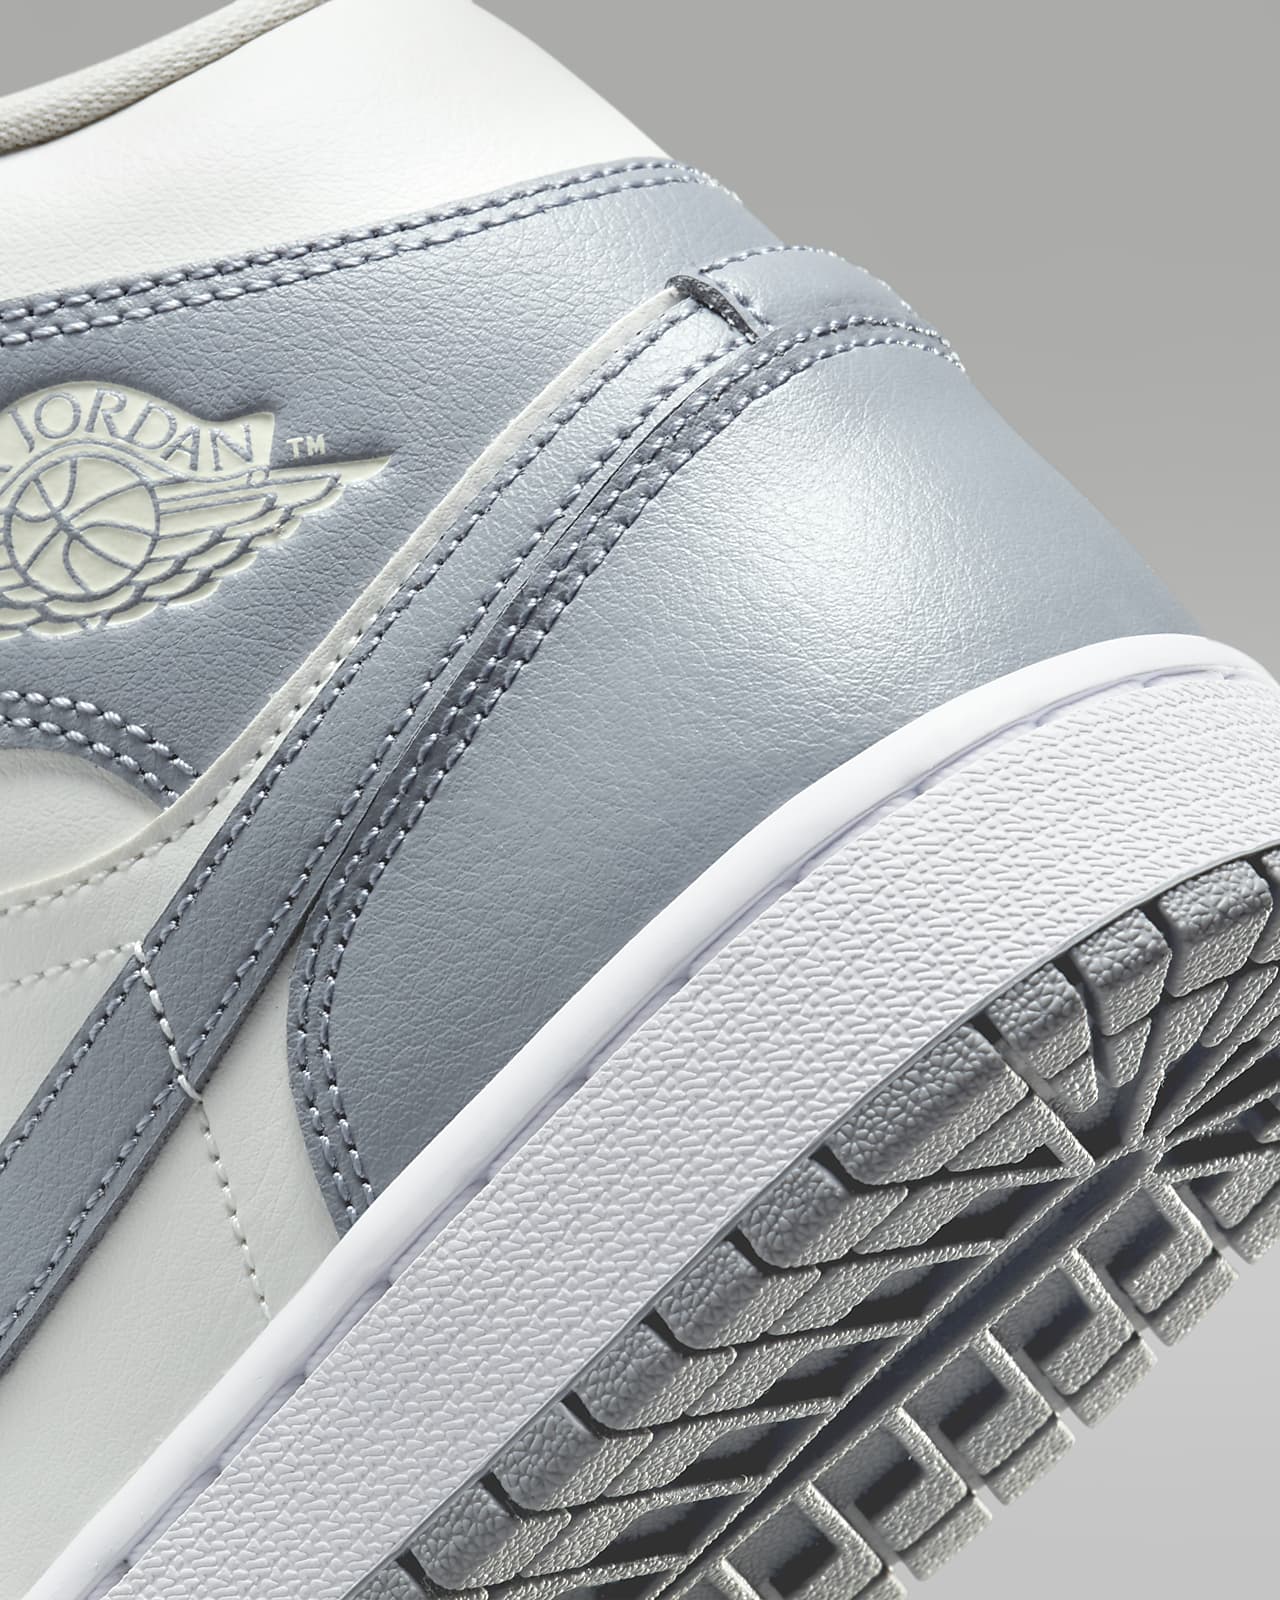 Nike Air Jordan 1 Mid trainers in grey/white